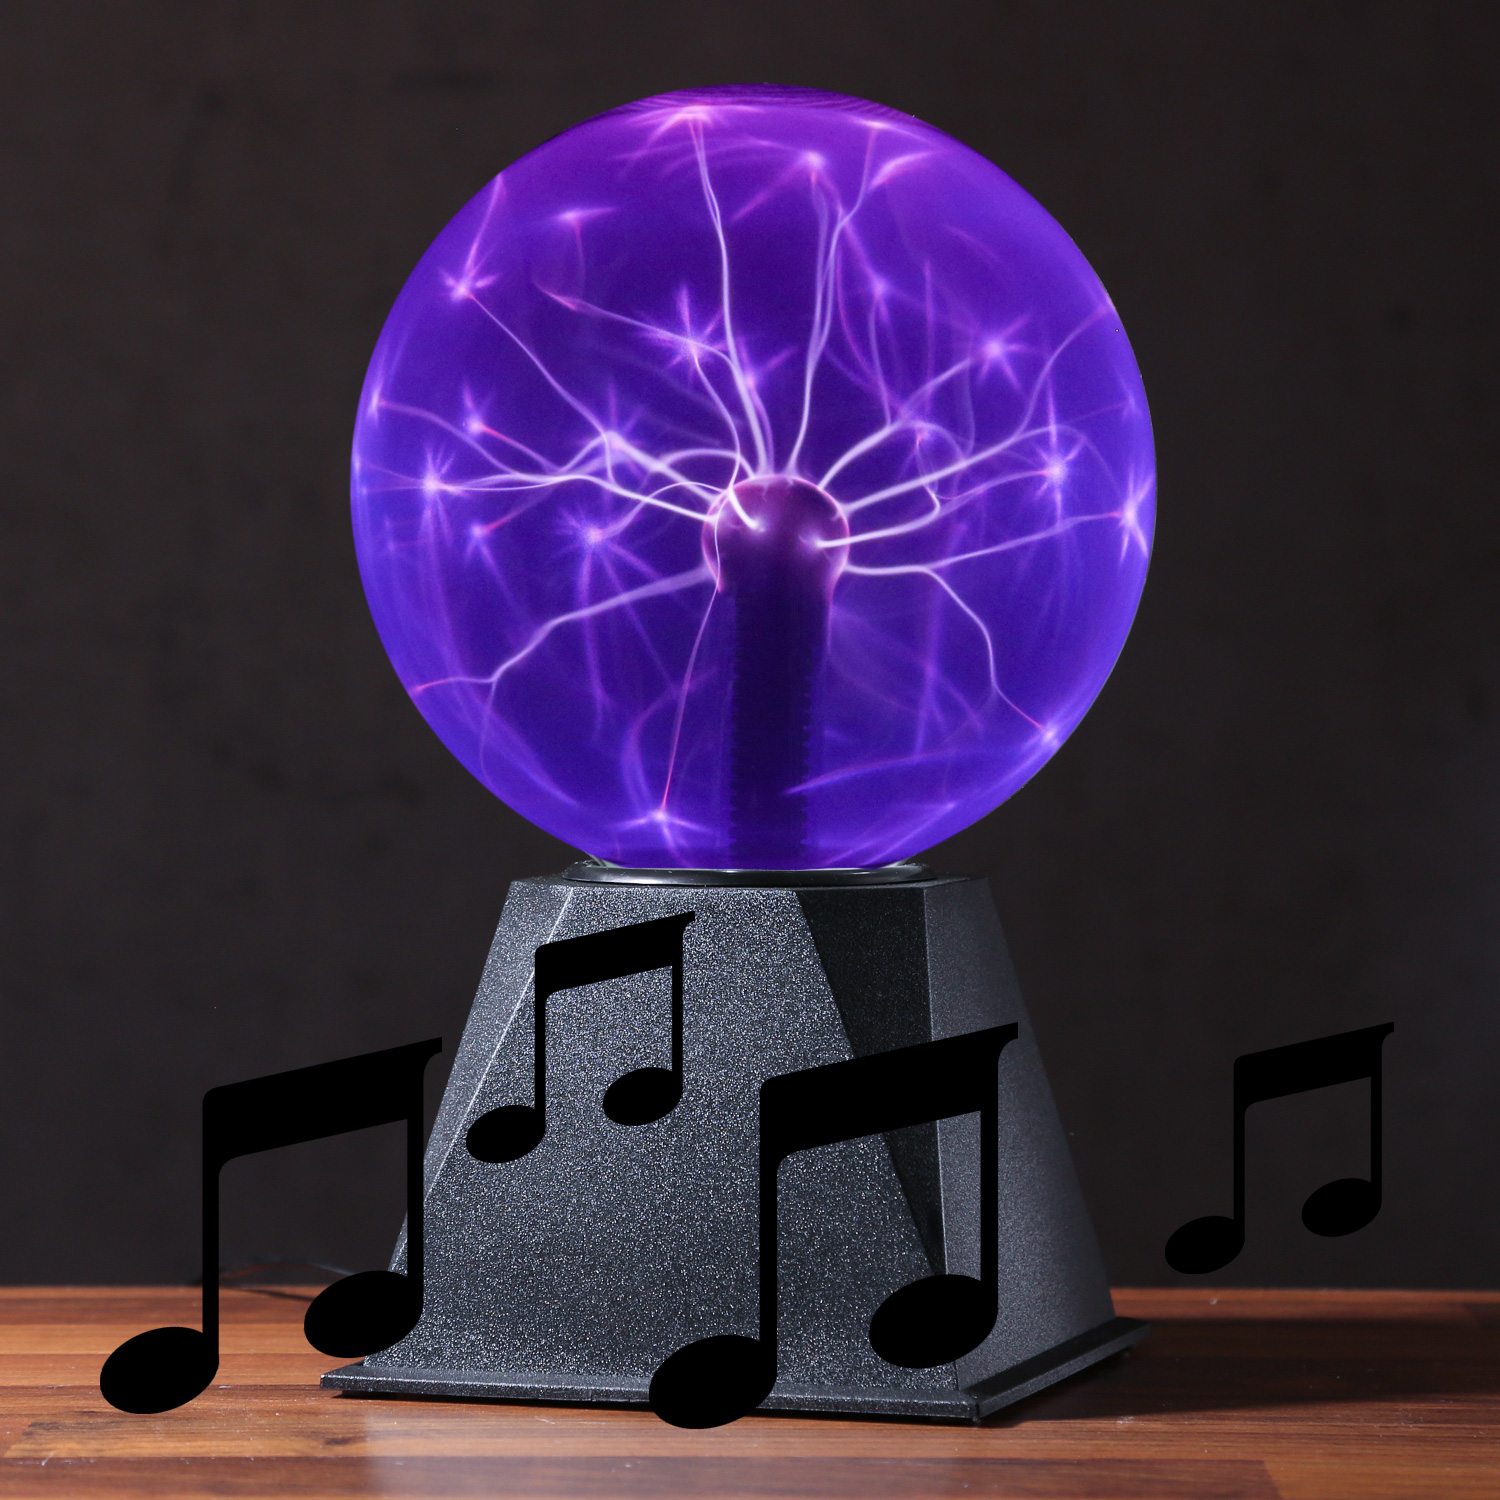 Plasmakugel zuckend- lila Blitz-Show Automatikbetrieb oder Musiksteuerung - 15cm Kugel